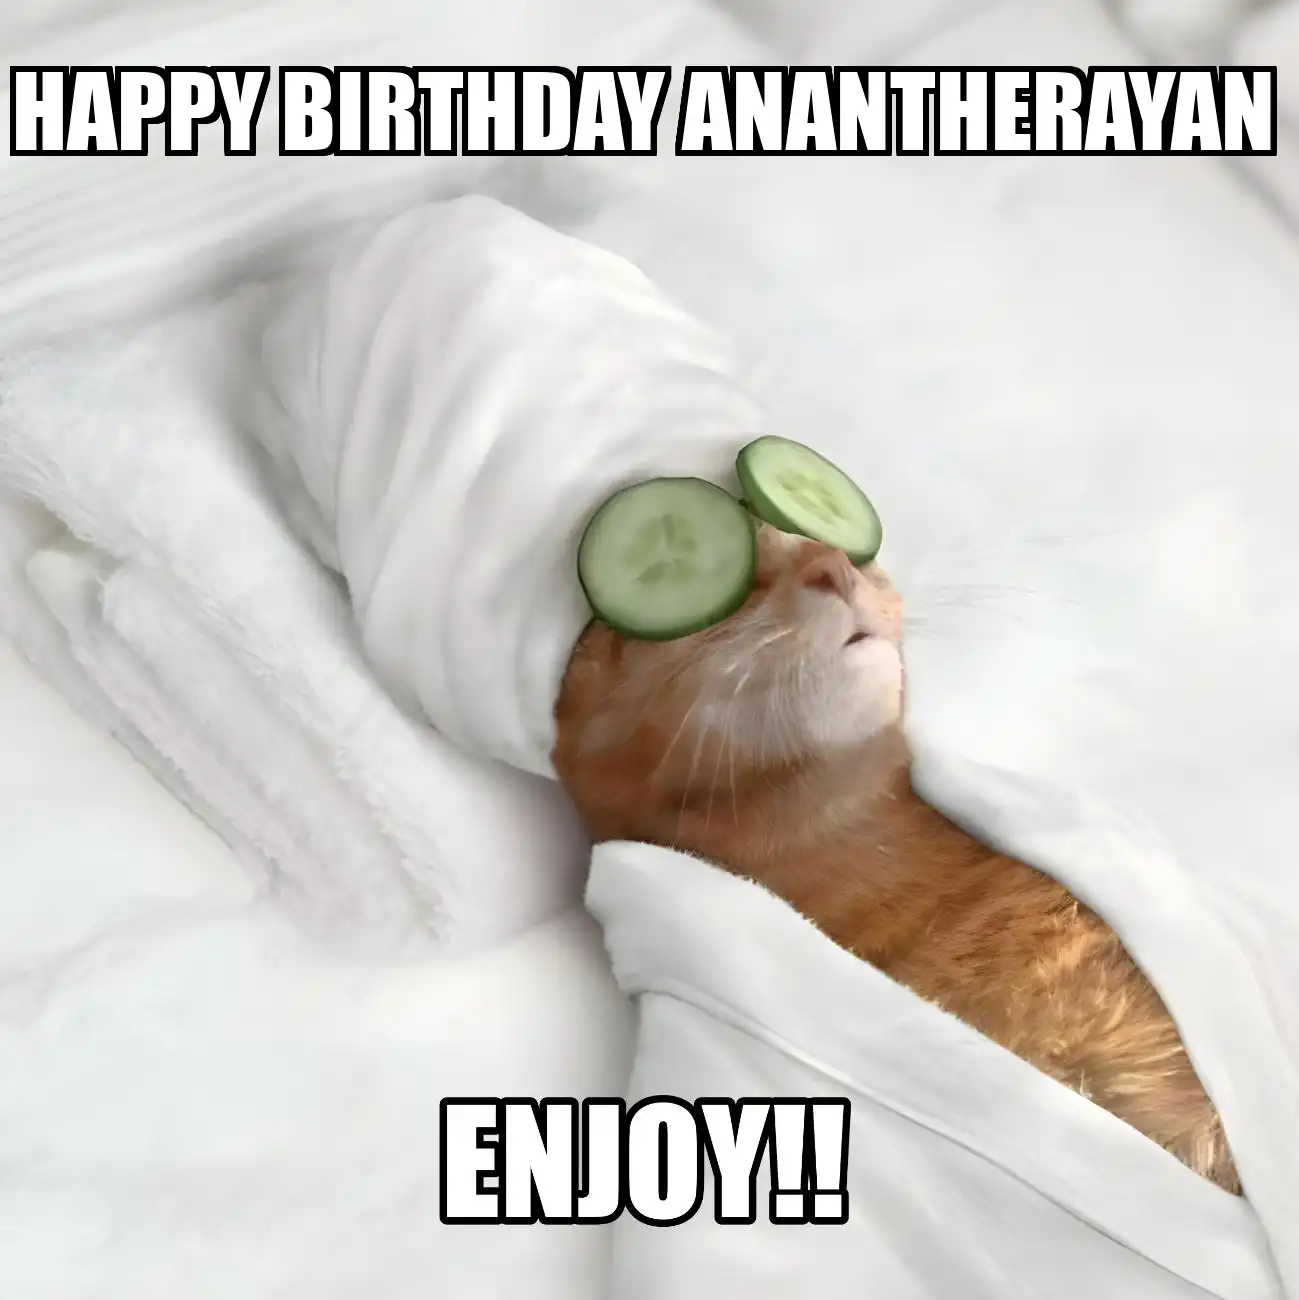 Happy Birthday Anantherayan Enjoy Cat Meme